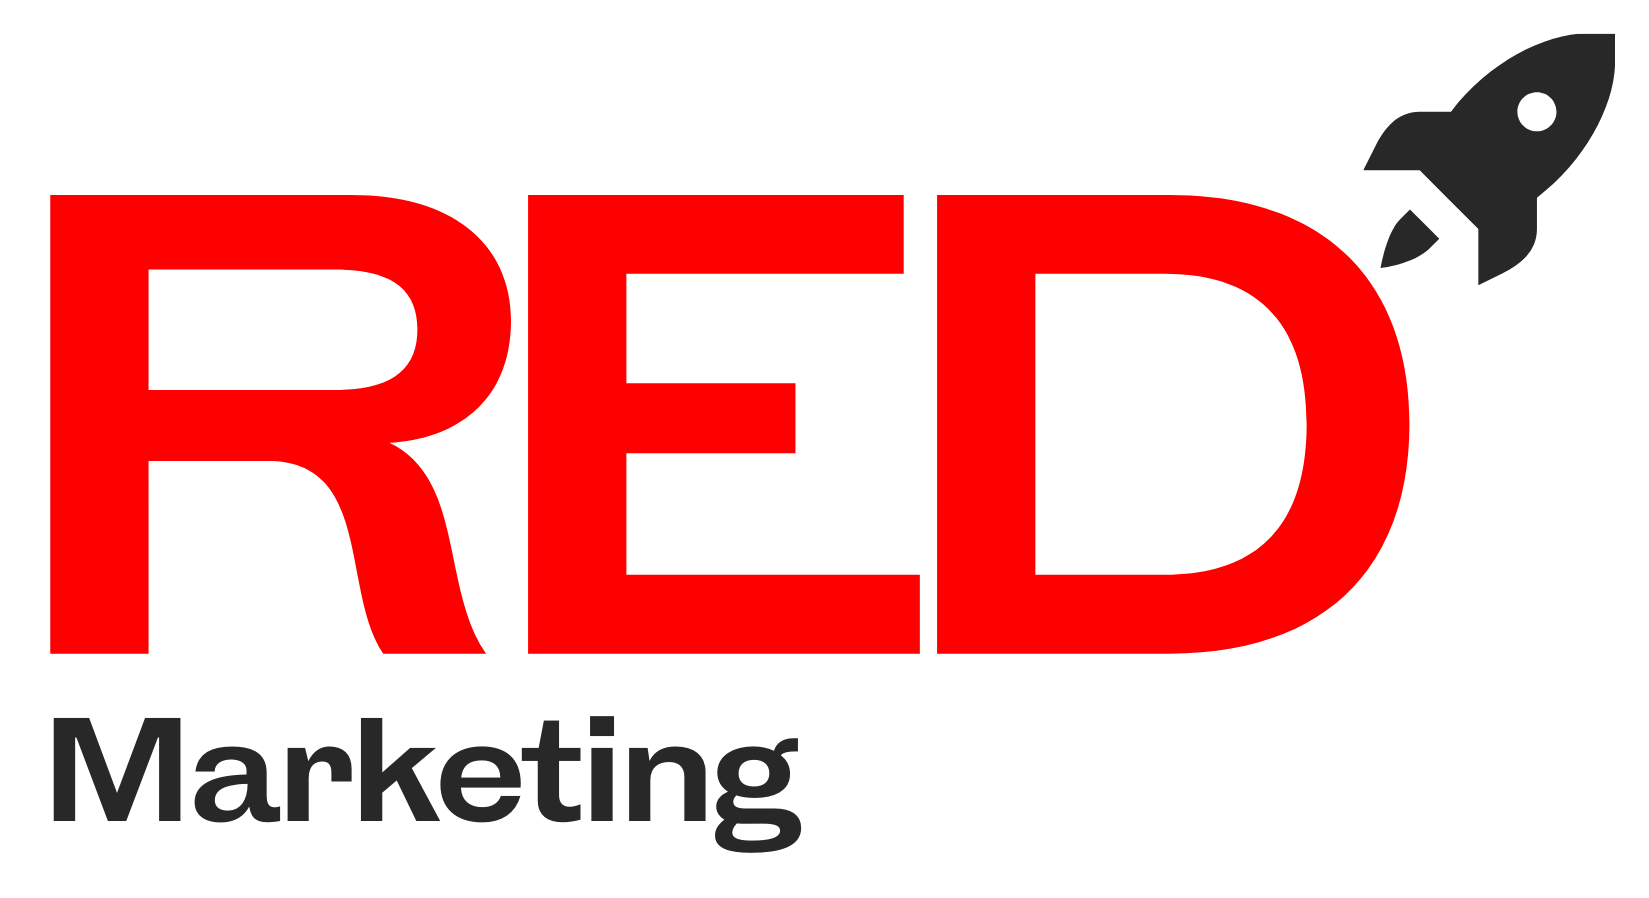 Red Marketing